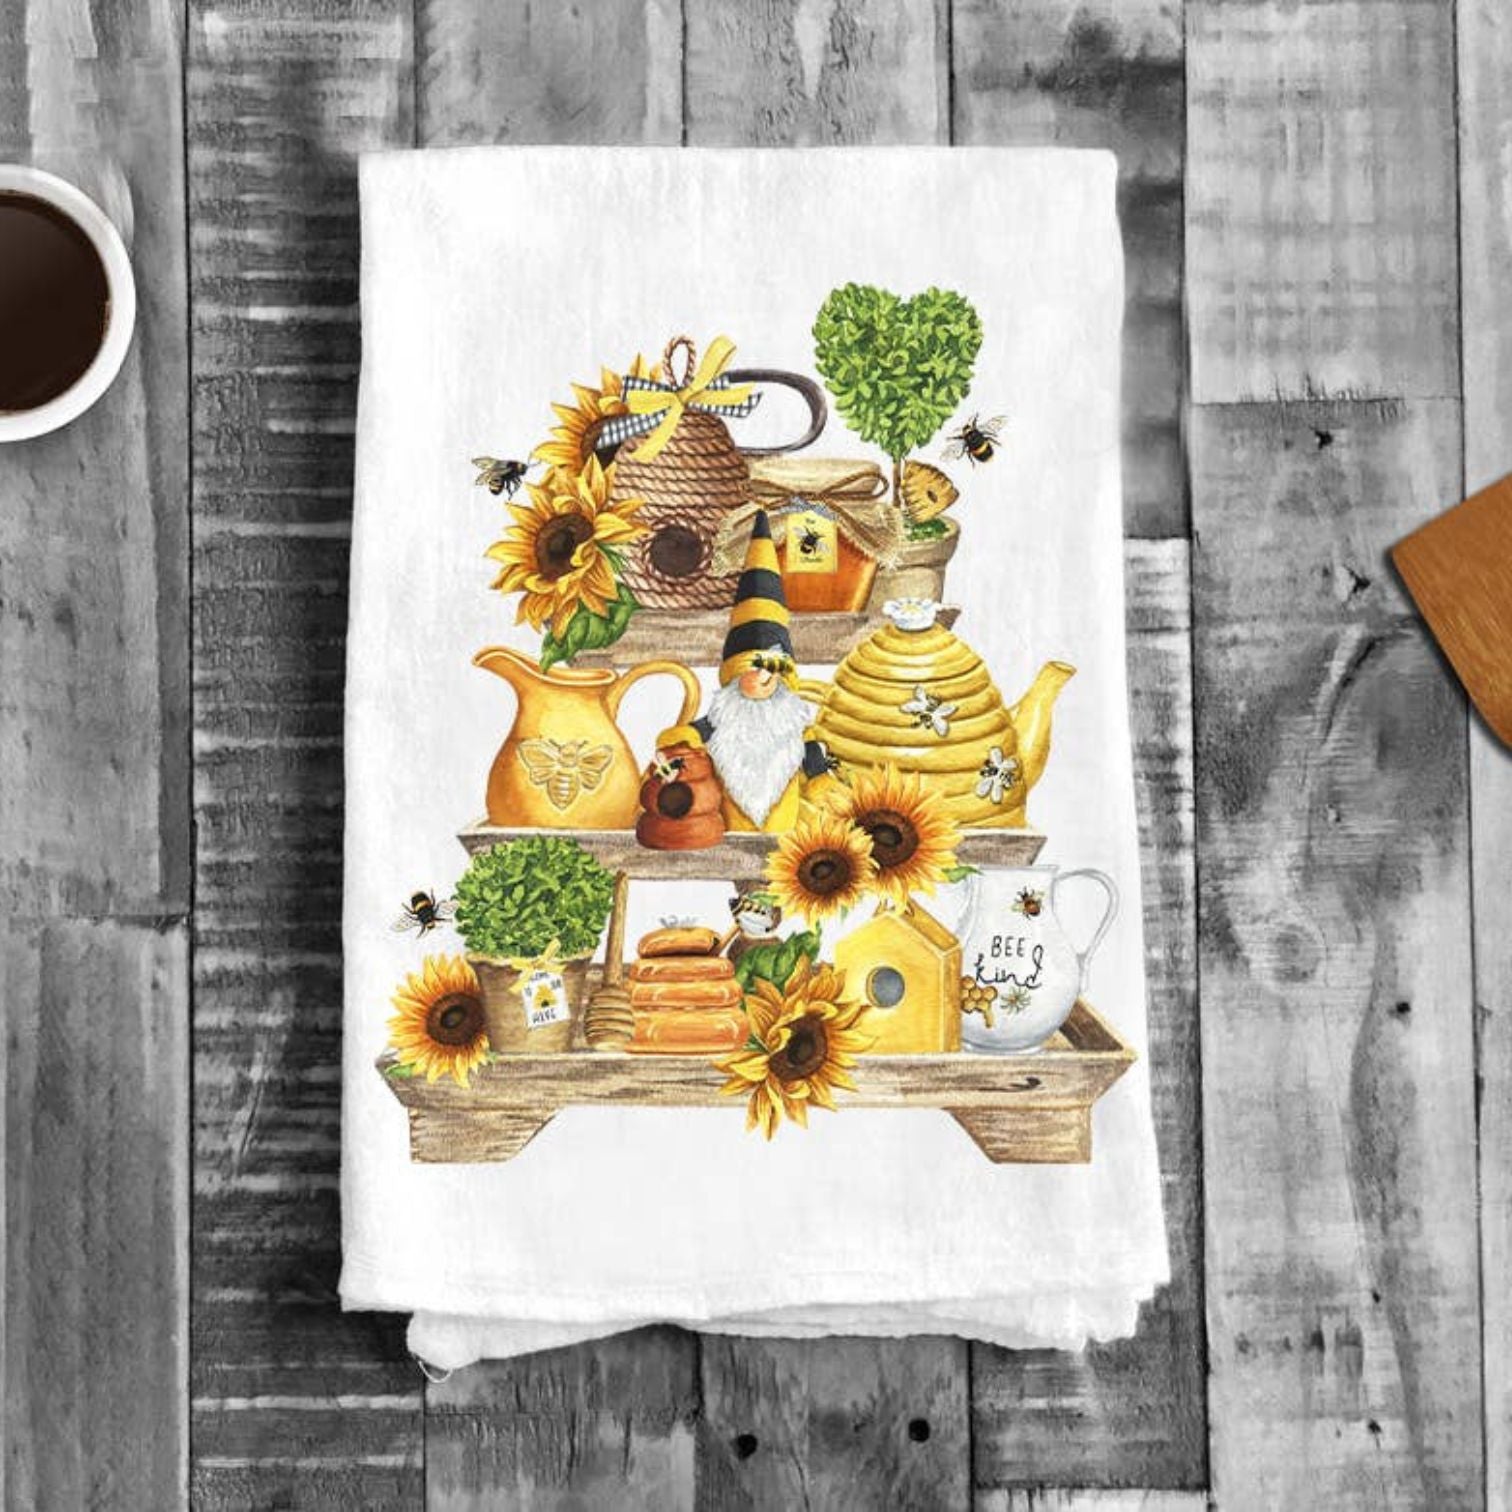 Bee Kind Honey Bees 3 Tier Tray Kitchen Cotton Tea Towels